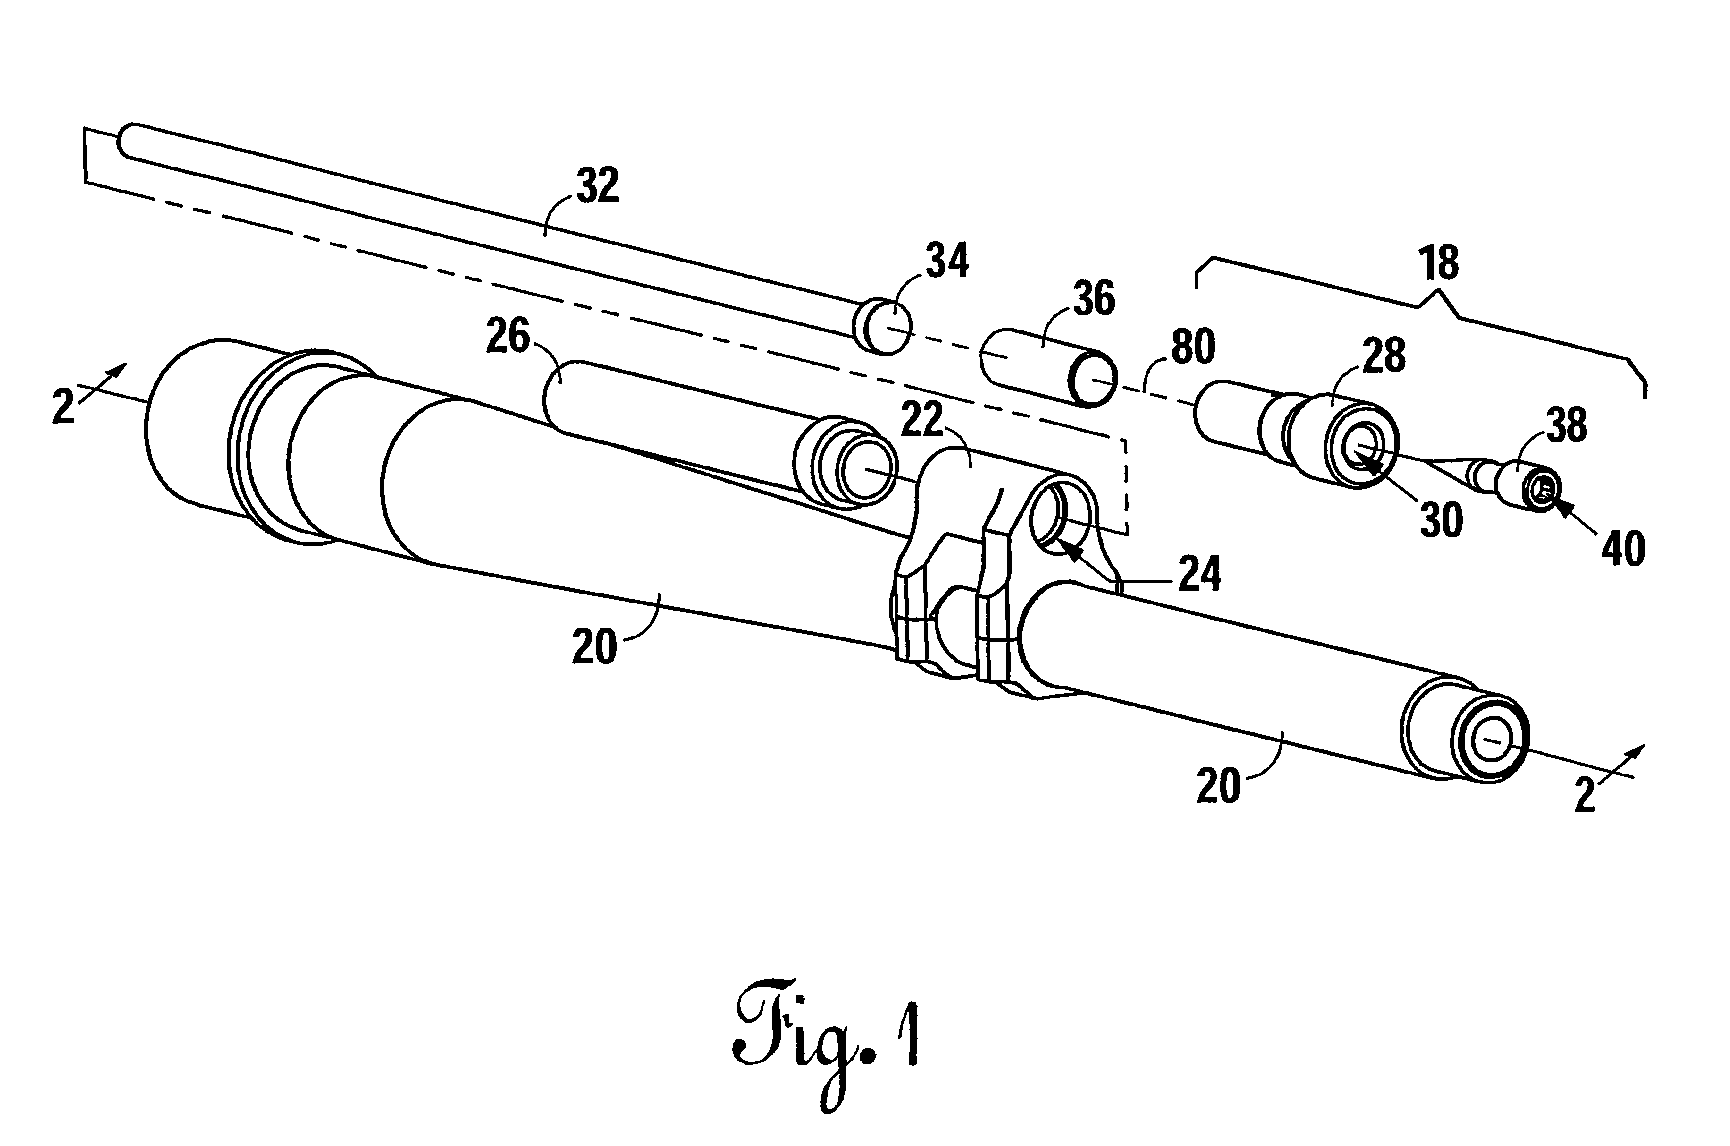 Adjustable gas cyclic regulator for an autoloading firearm